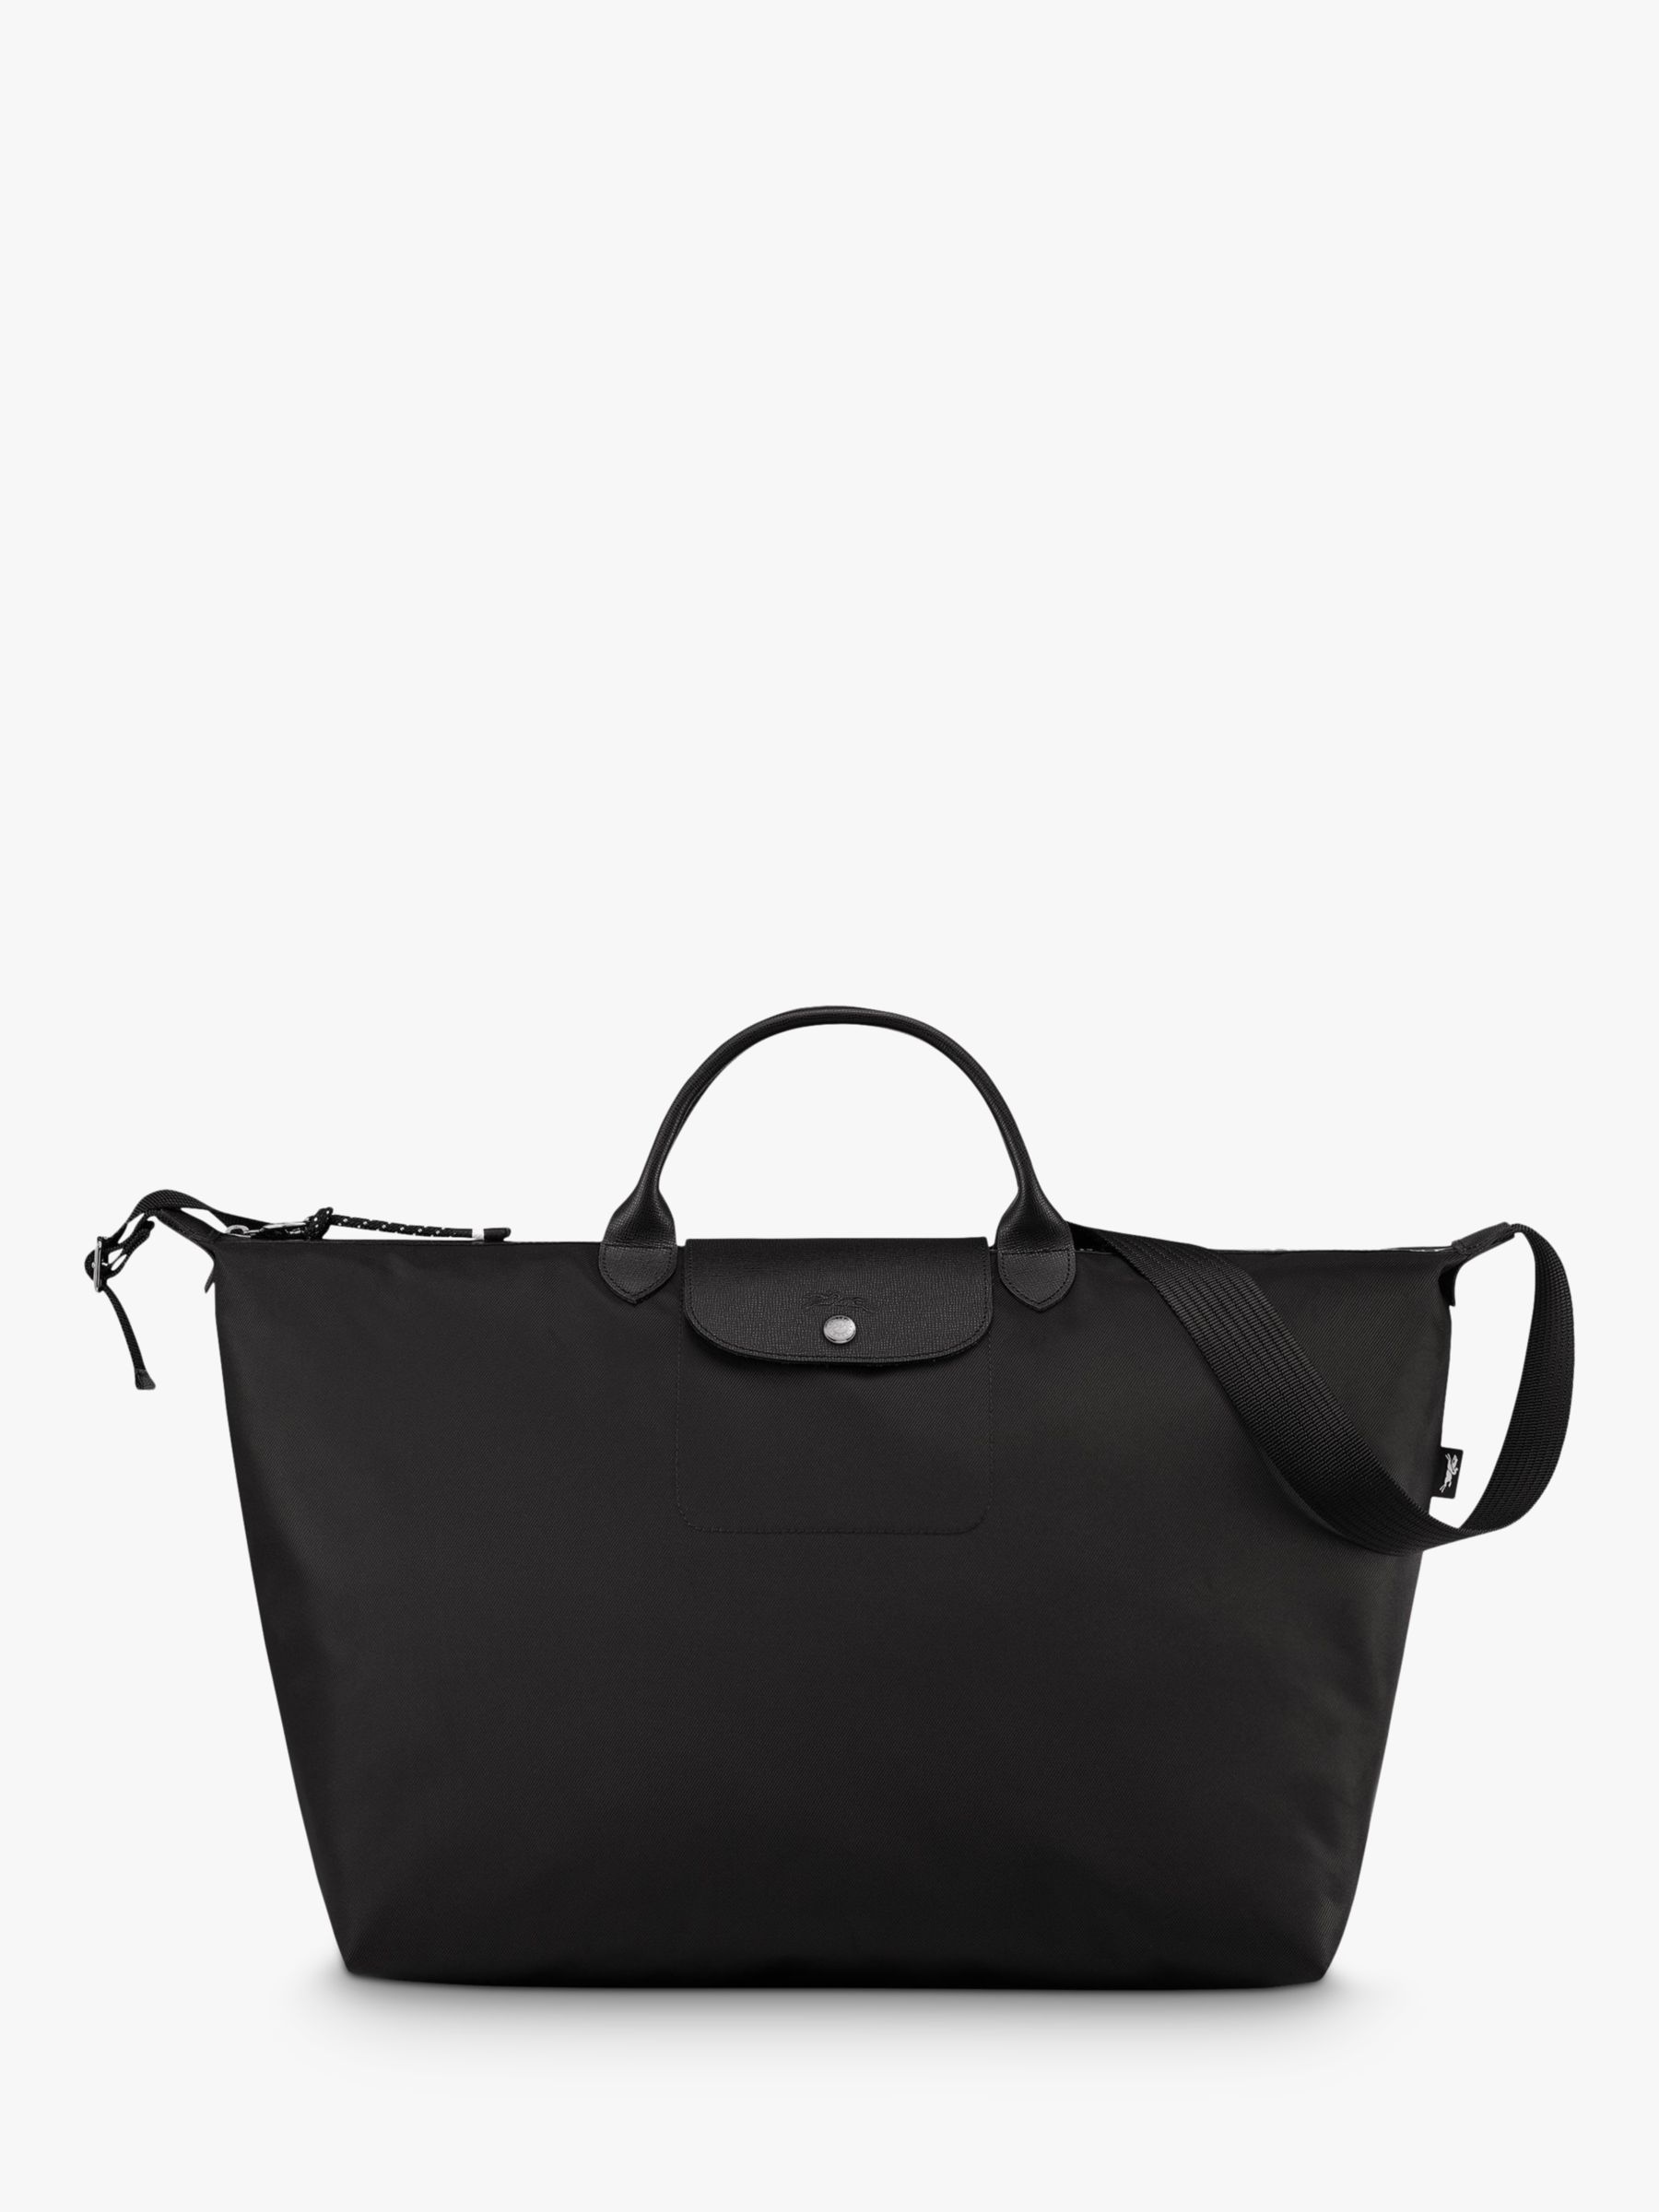 Longchamp Le Pliage Energy Small Travel Bag, Black at John Lewis & Partners